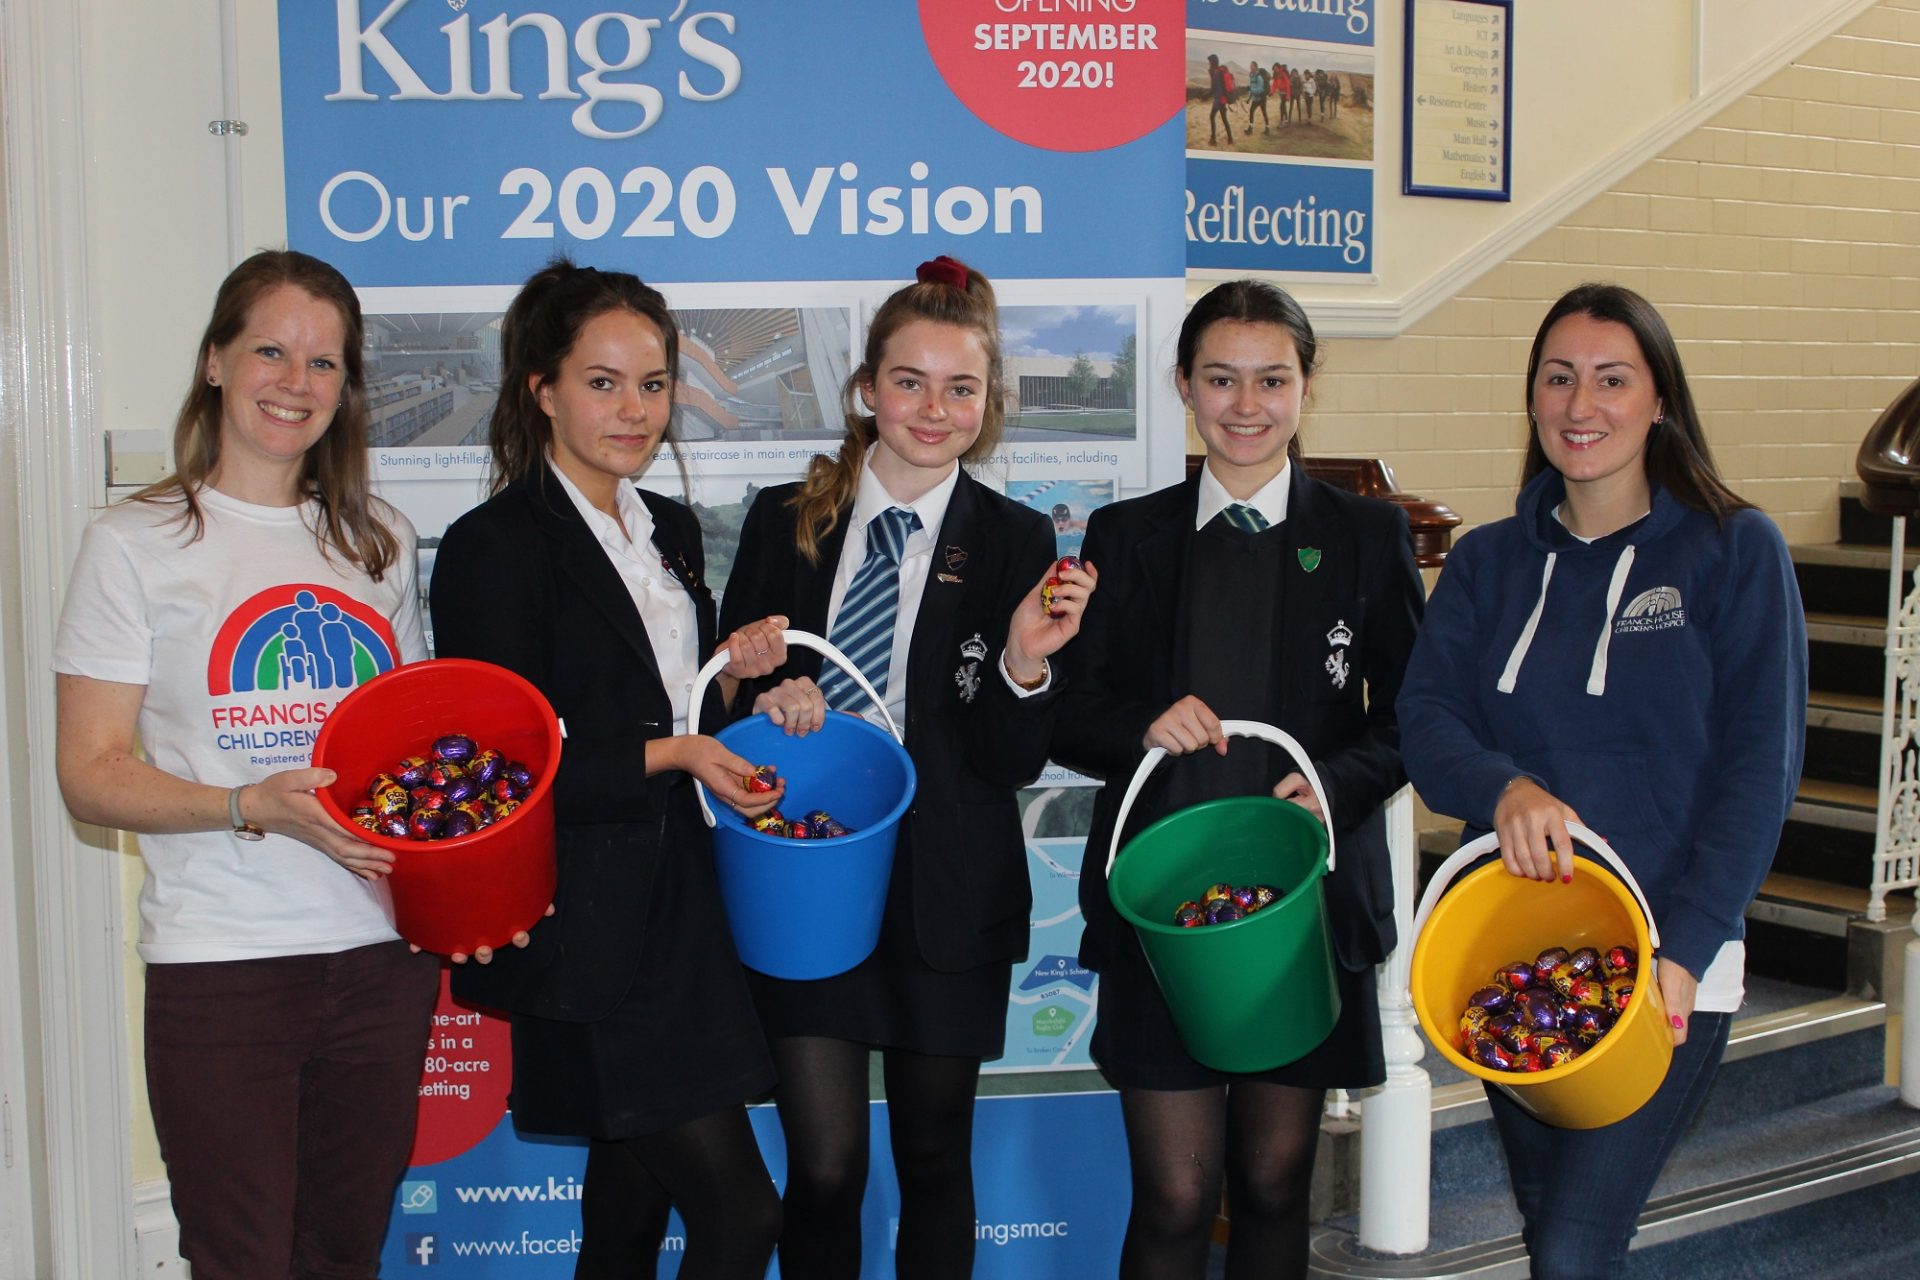 Kings School Macclesfield creme egg donation